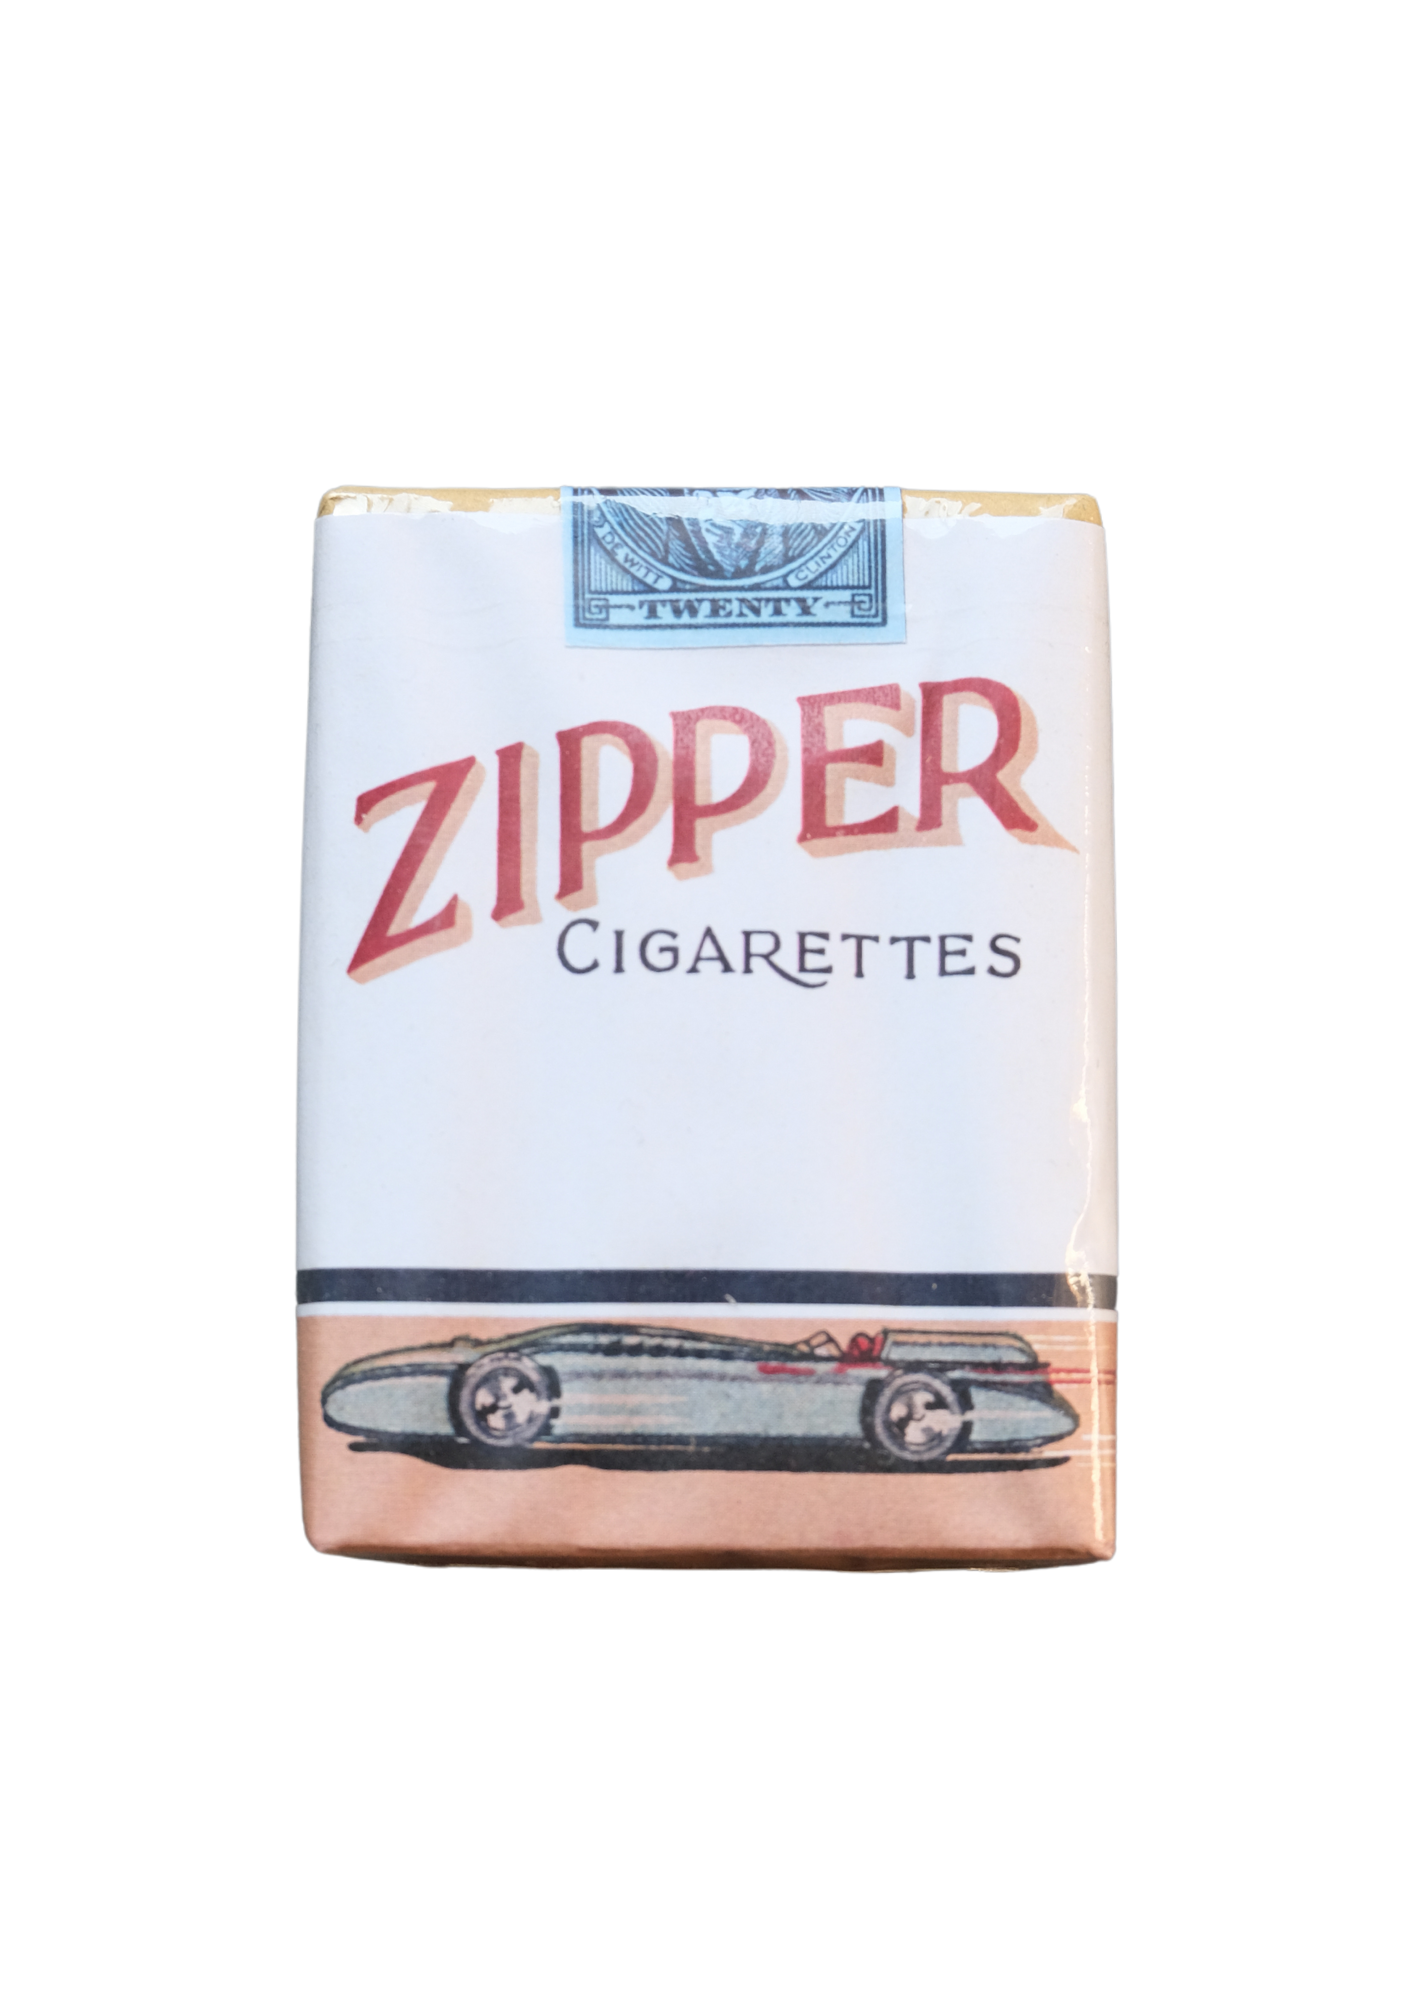 Dummy Cigarette Pack, Zipper